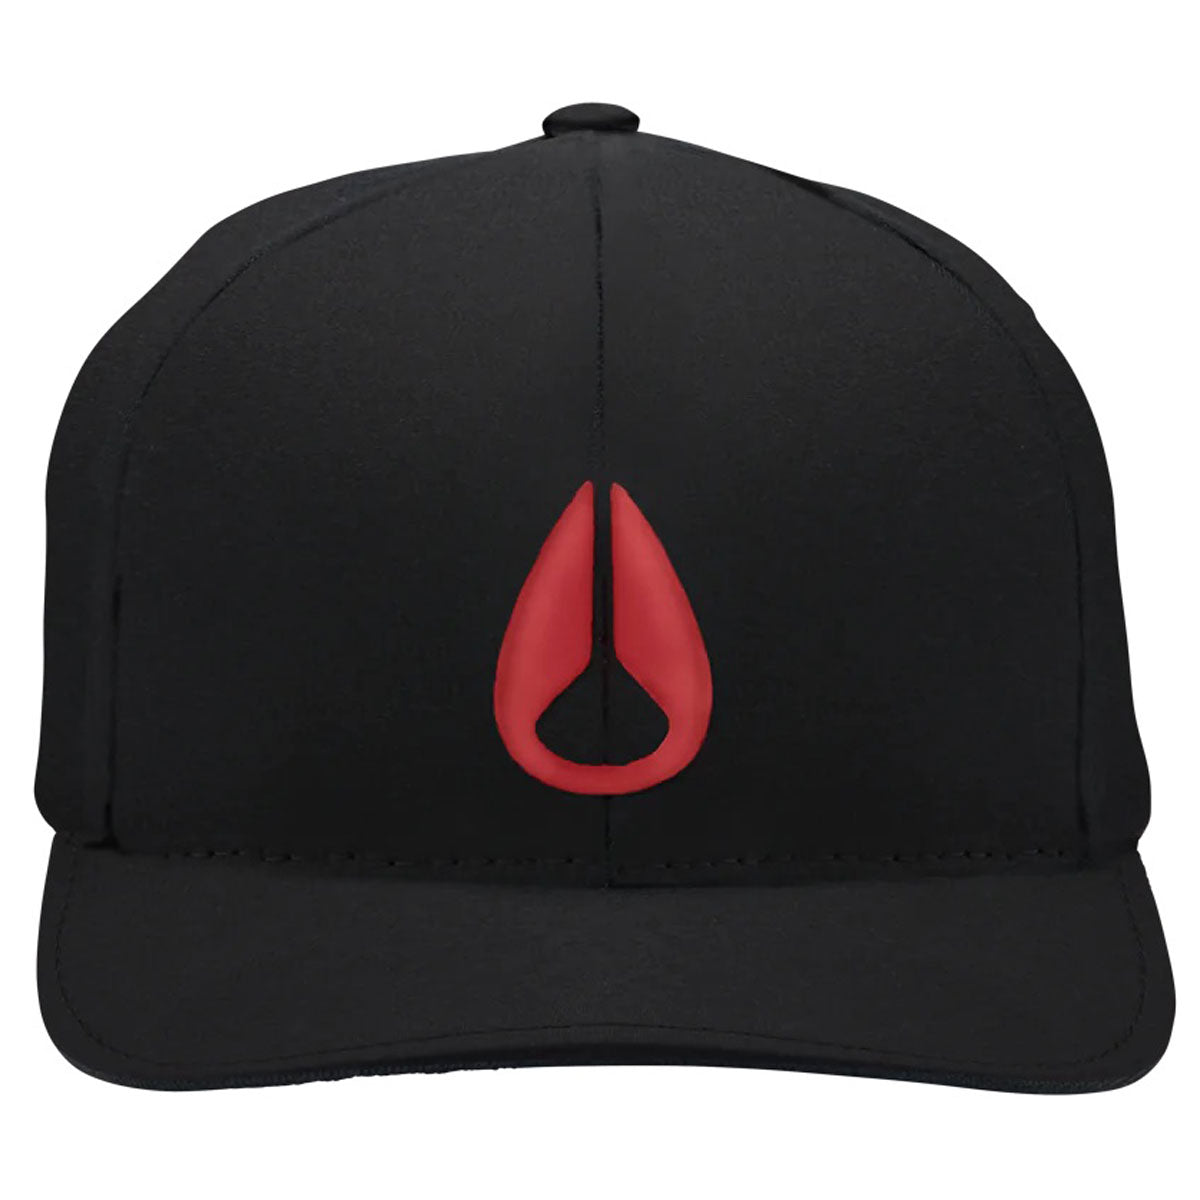 Nixon Arroyo Hat - Black/Red image 3